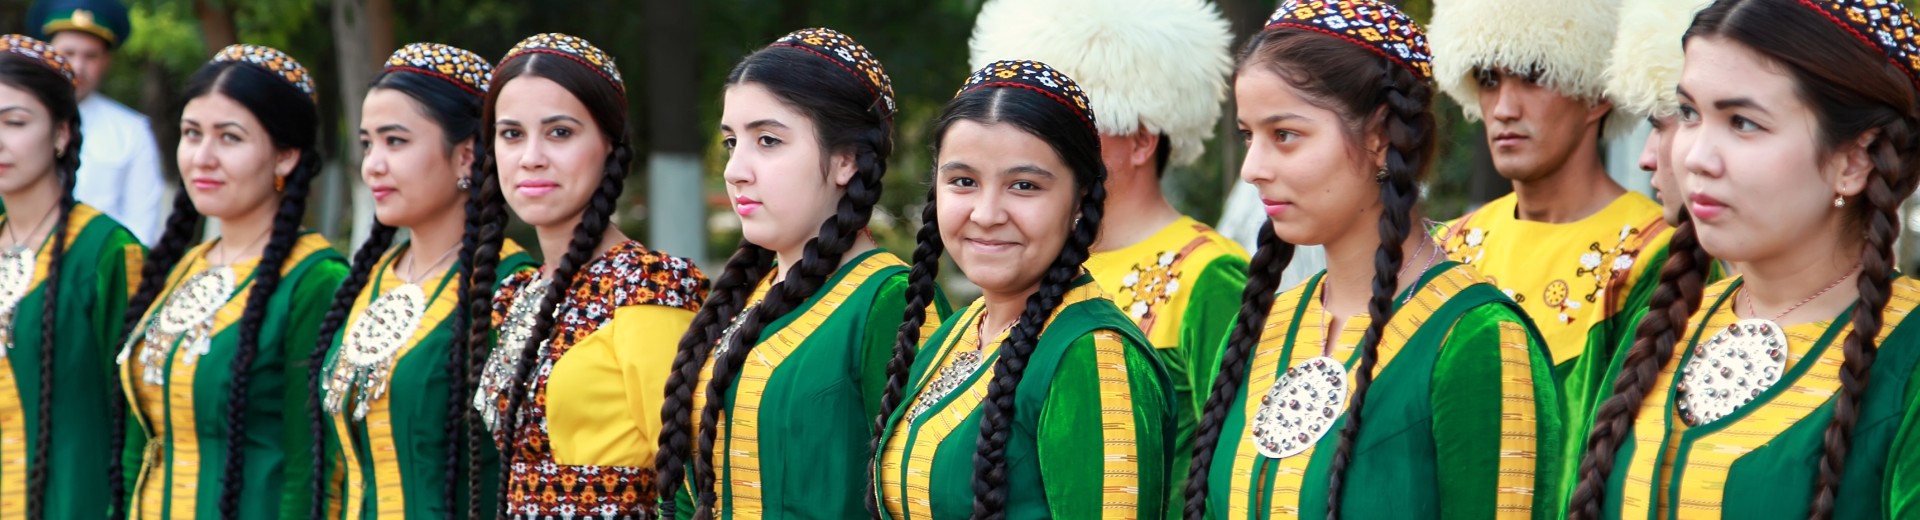 Groepsreizen naar Turkmenistan